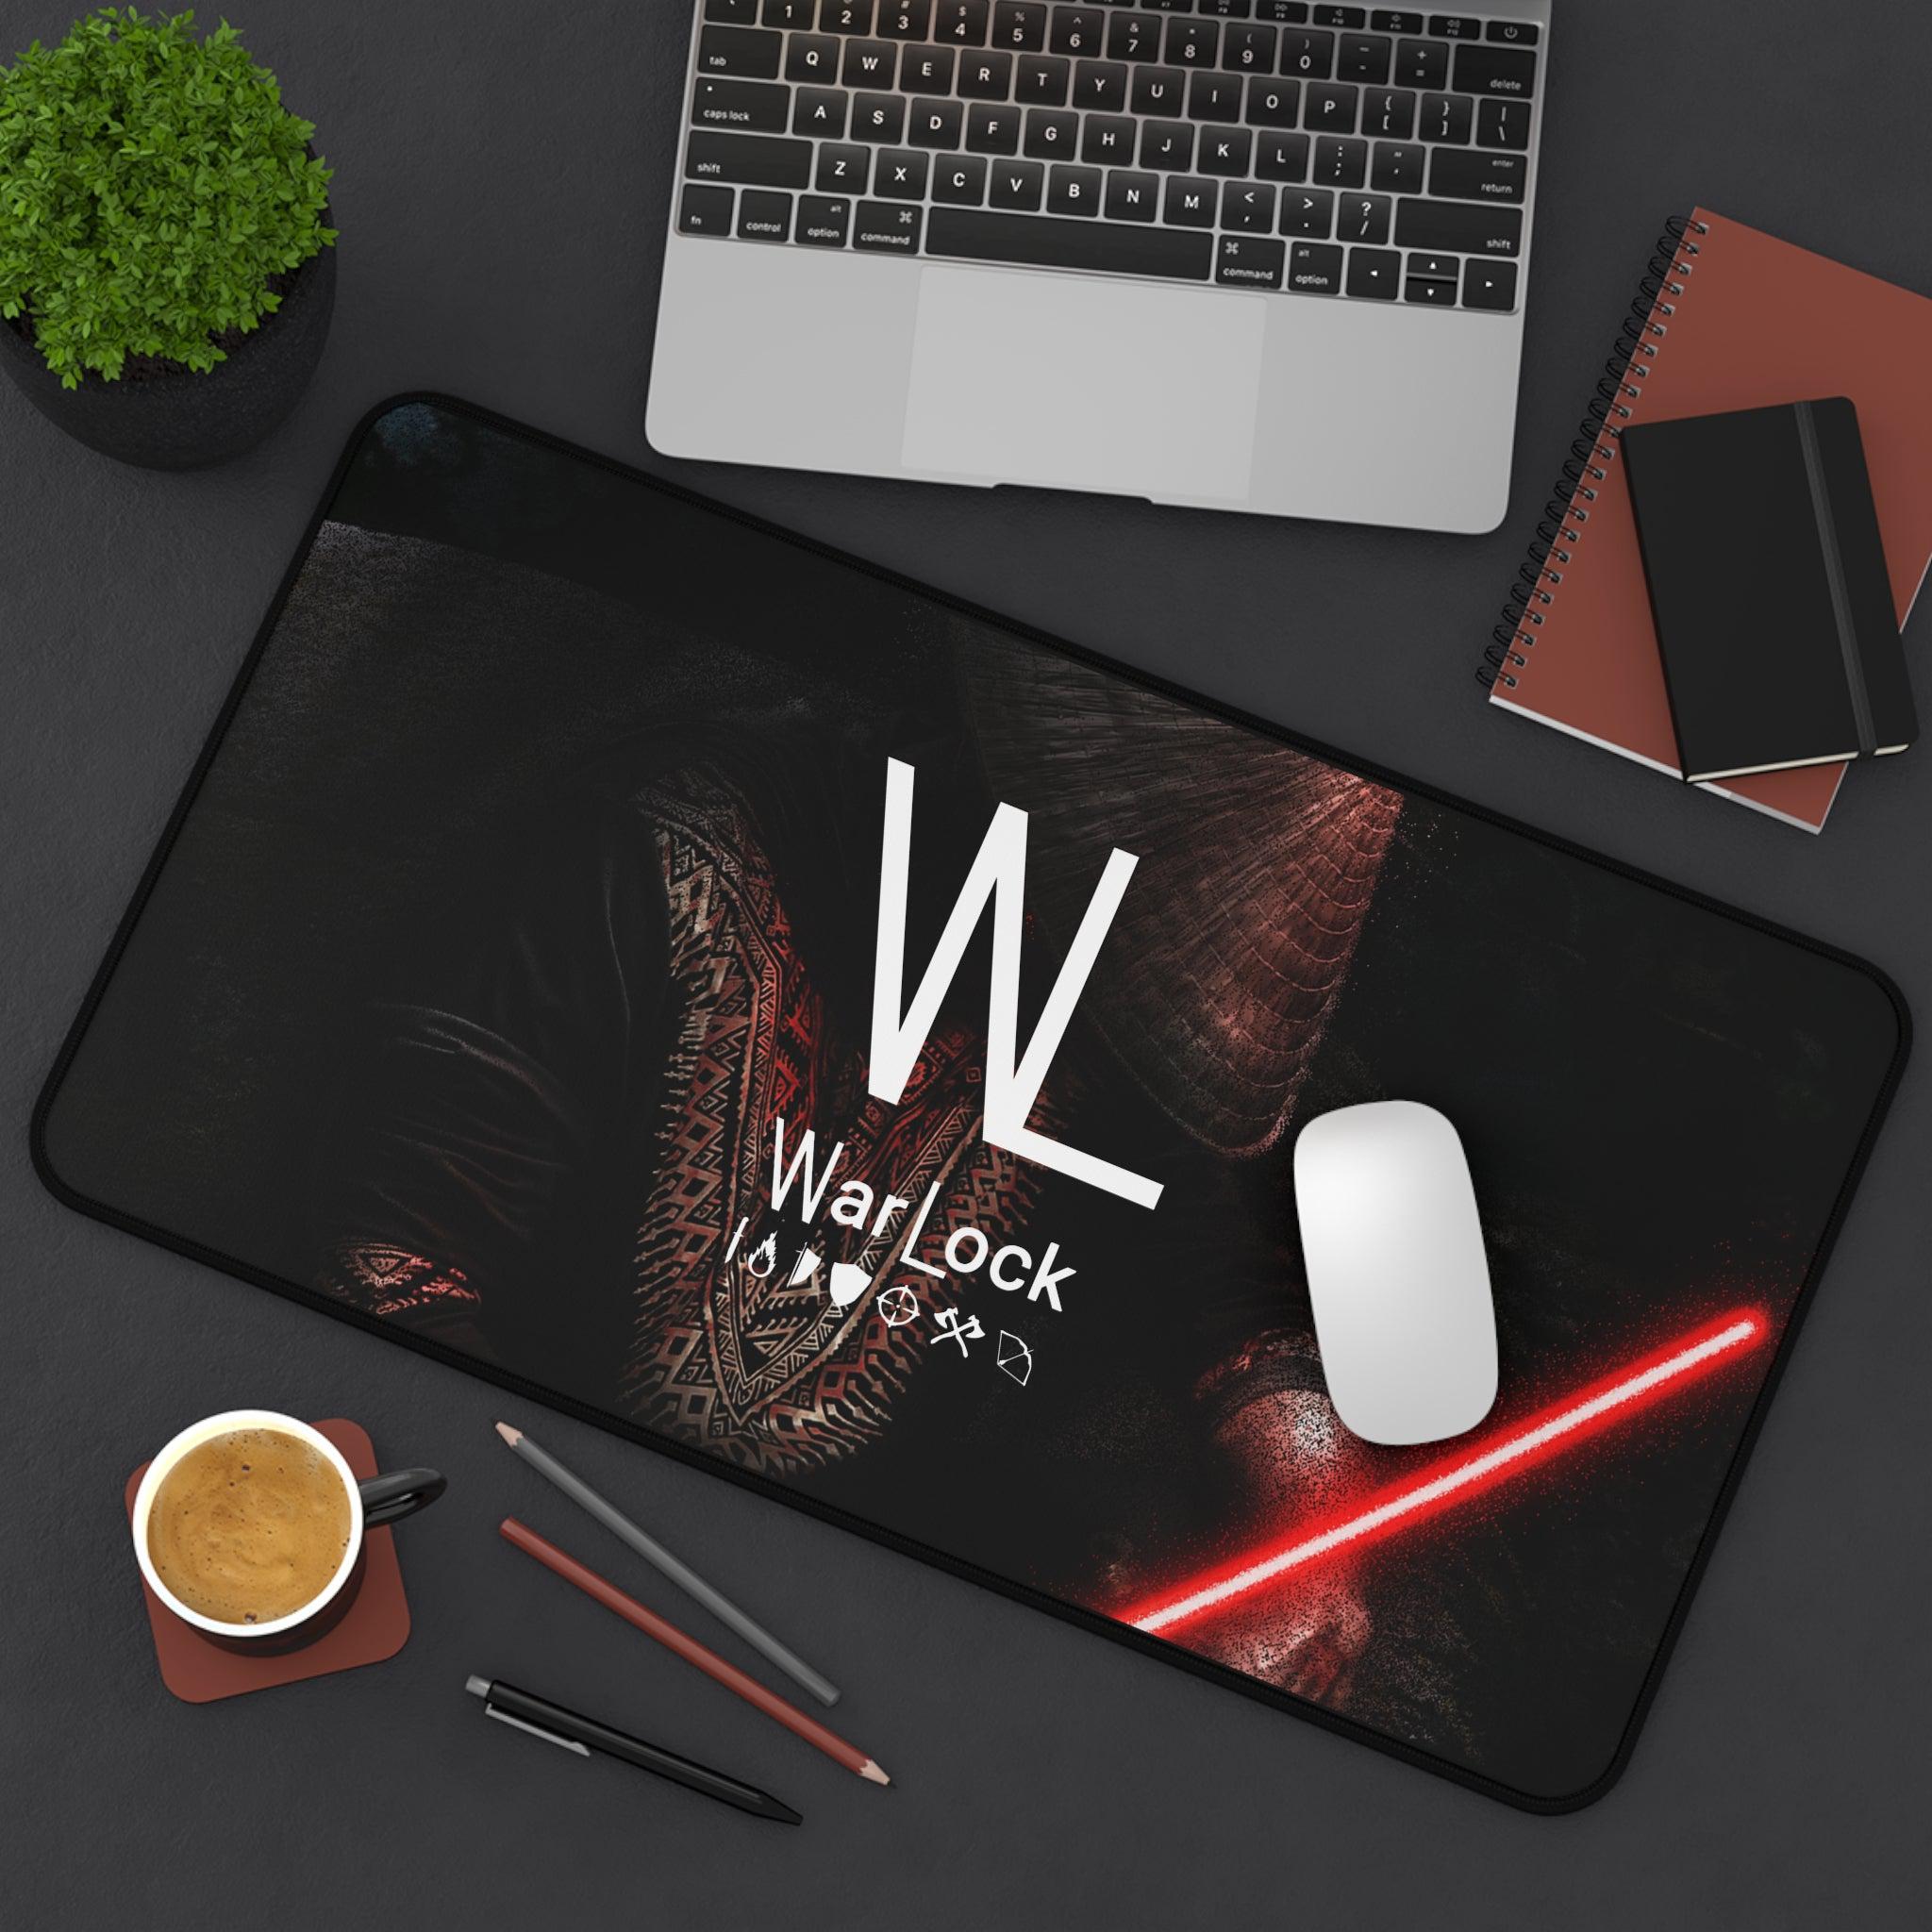 WarLock Mouse Pad / Desk Mat (Version 2)